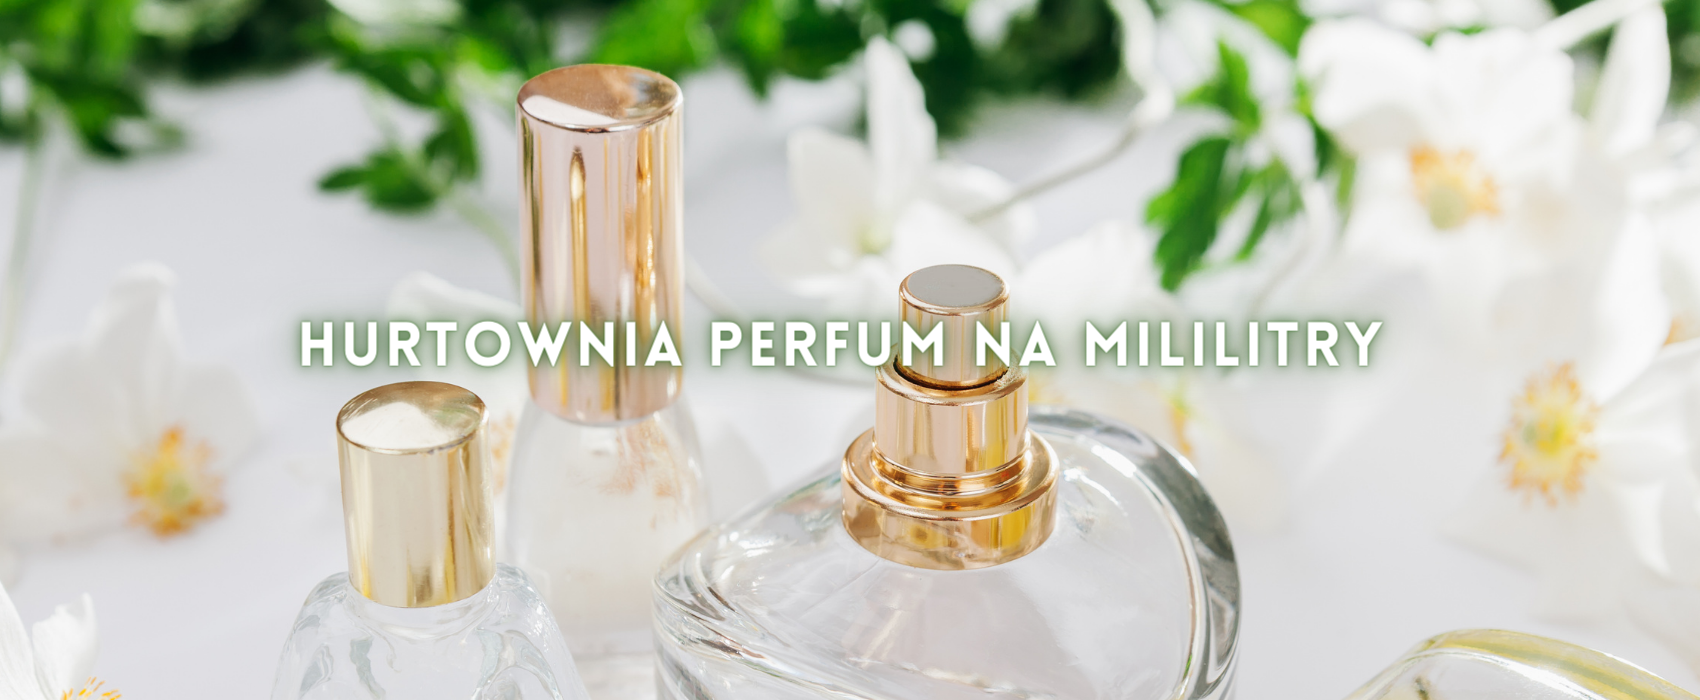 perfumy hurtownia perfum na mililitry